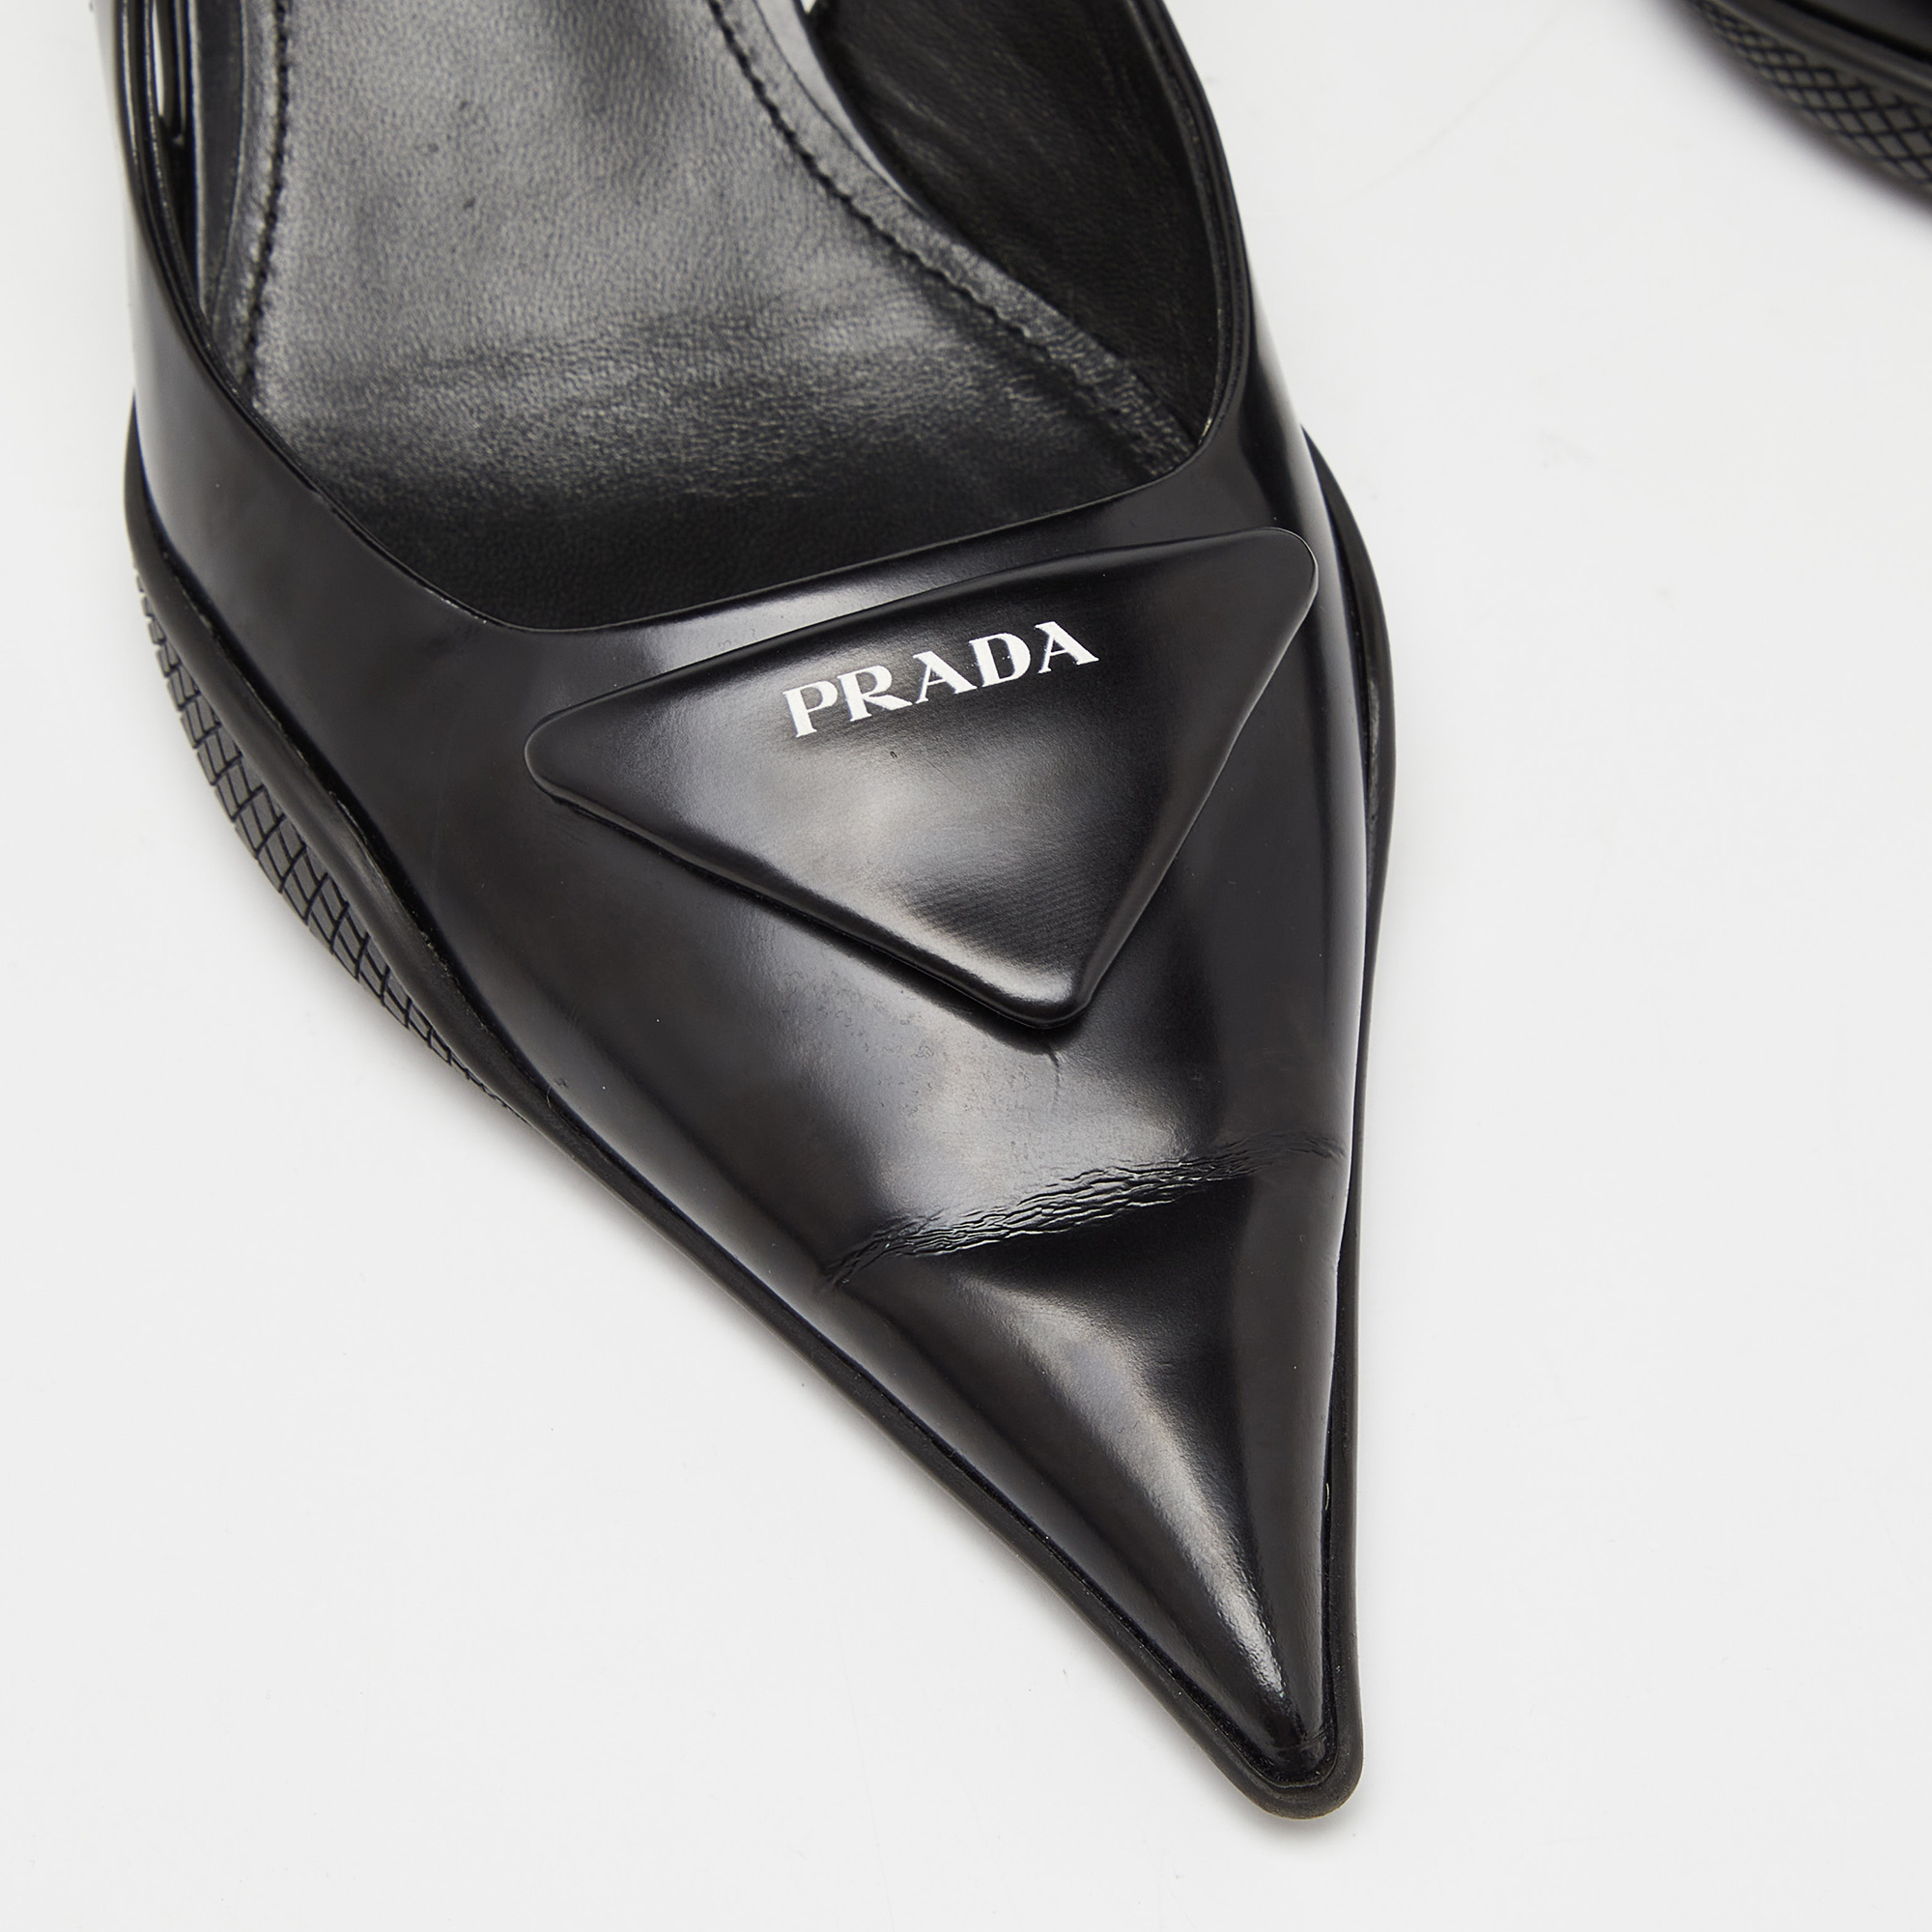 Prada Black Leather Triangle Logo Kitten Heel Slingback Sandals Size 37